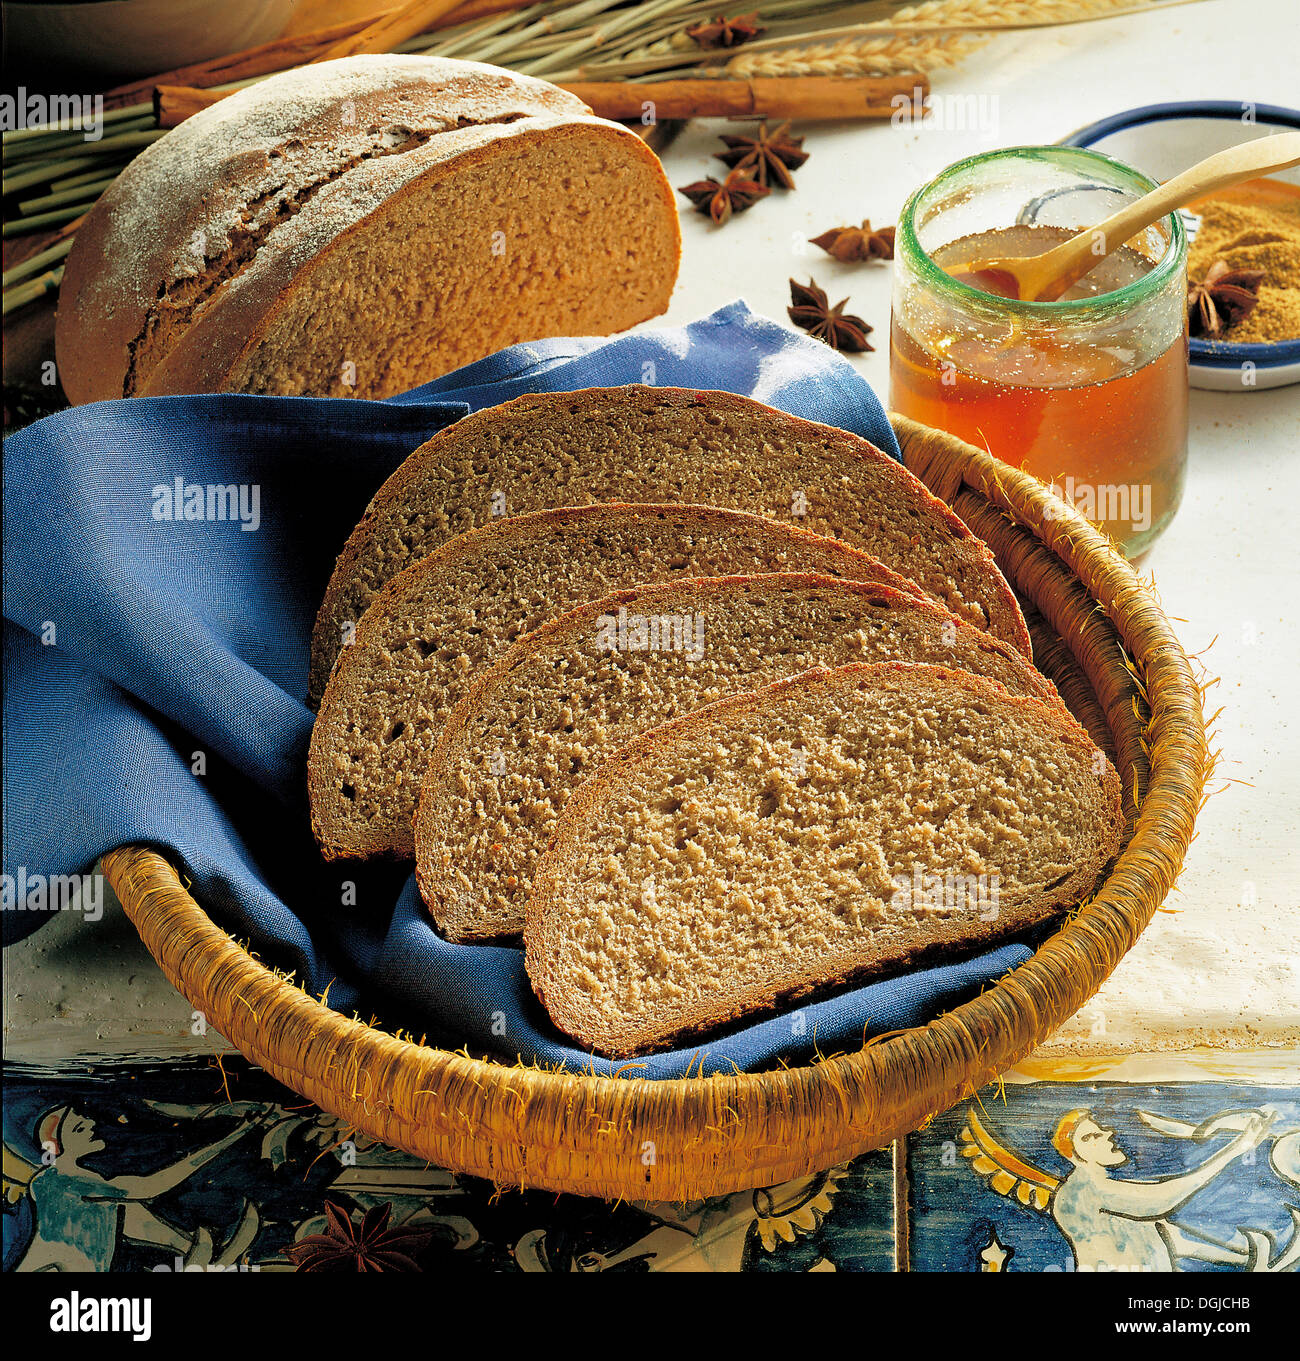 Homemade crusty bread, Portugal. Stock Photo